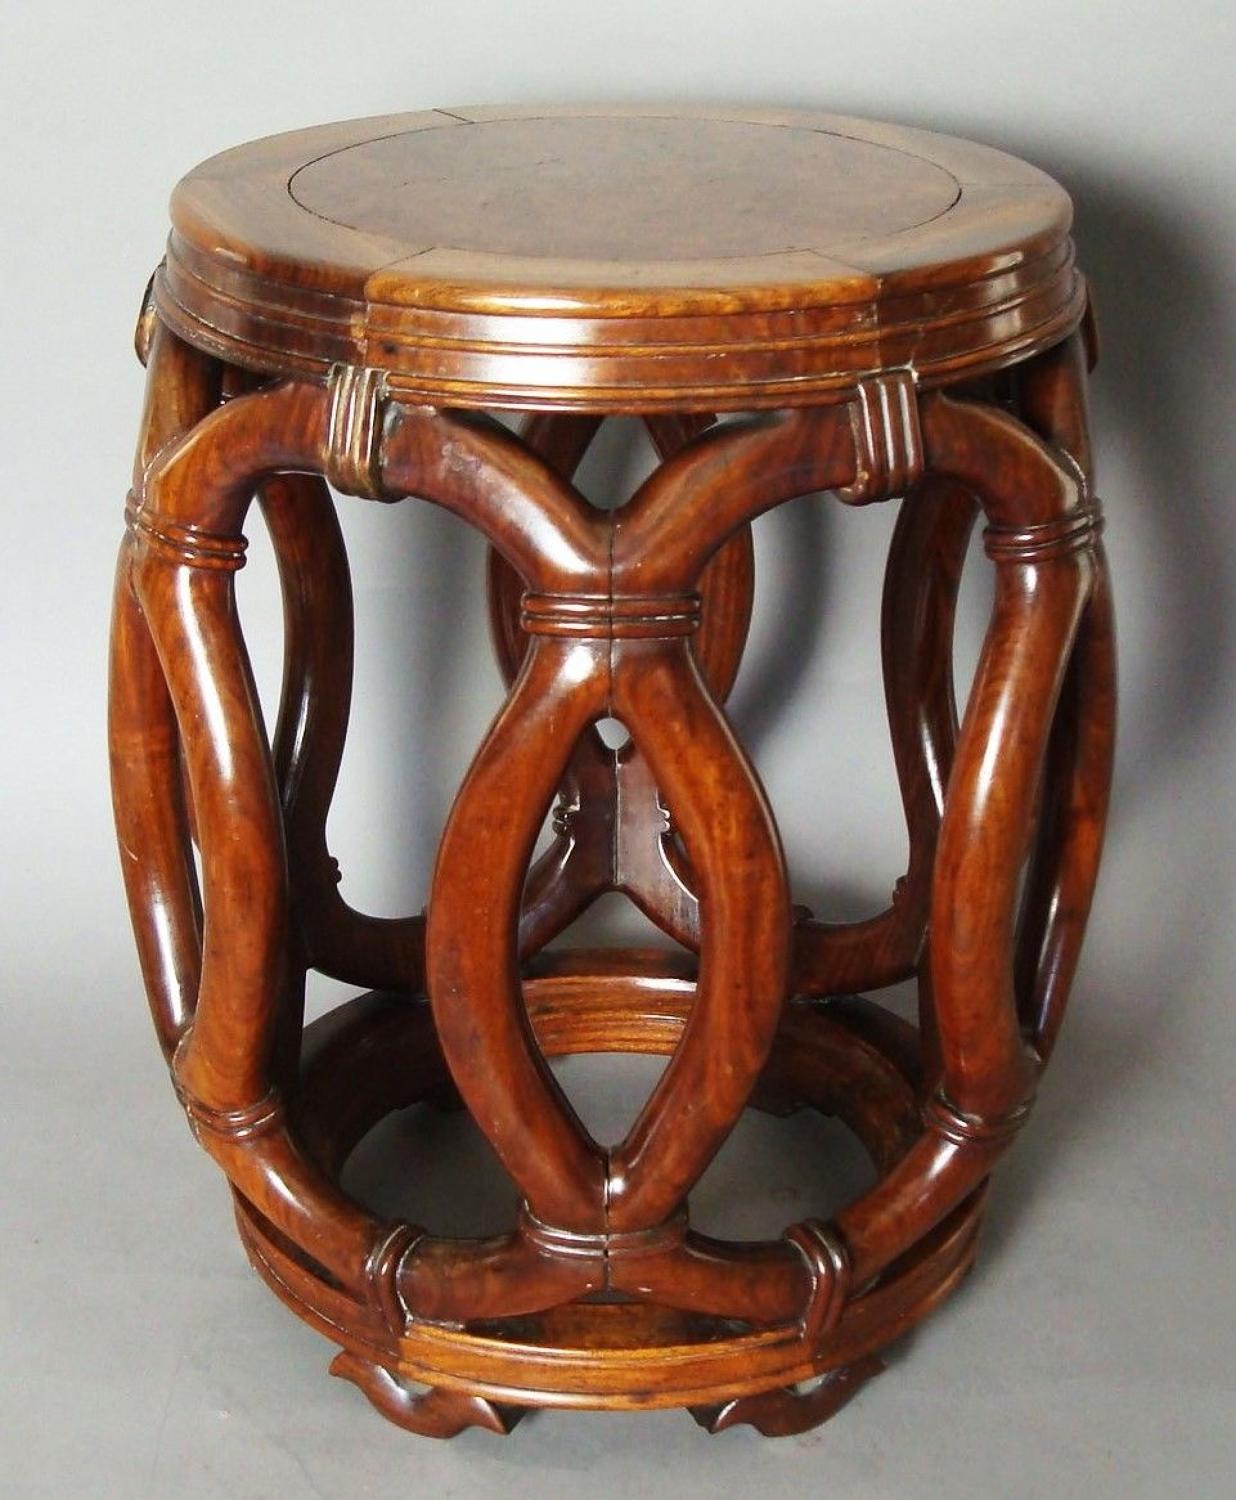 C19th Chinese hardwood stool